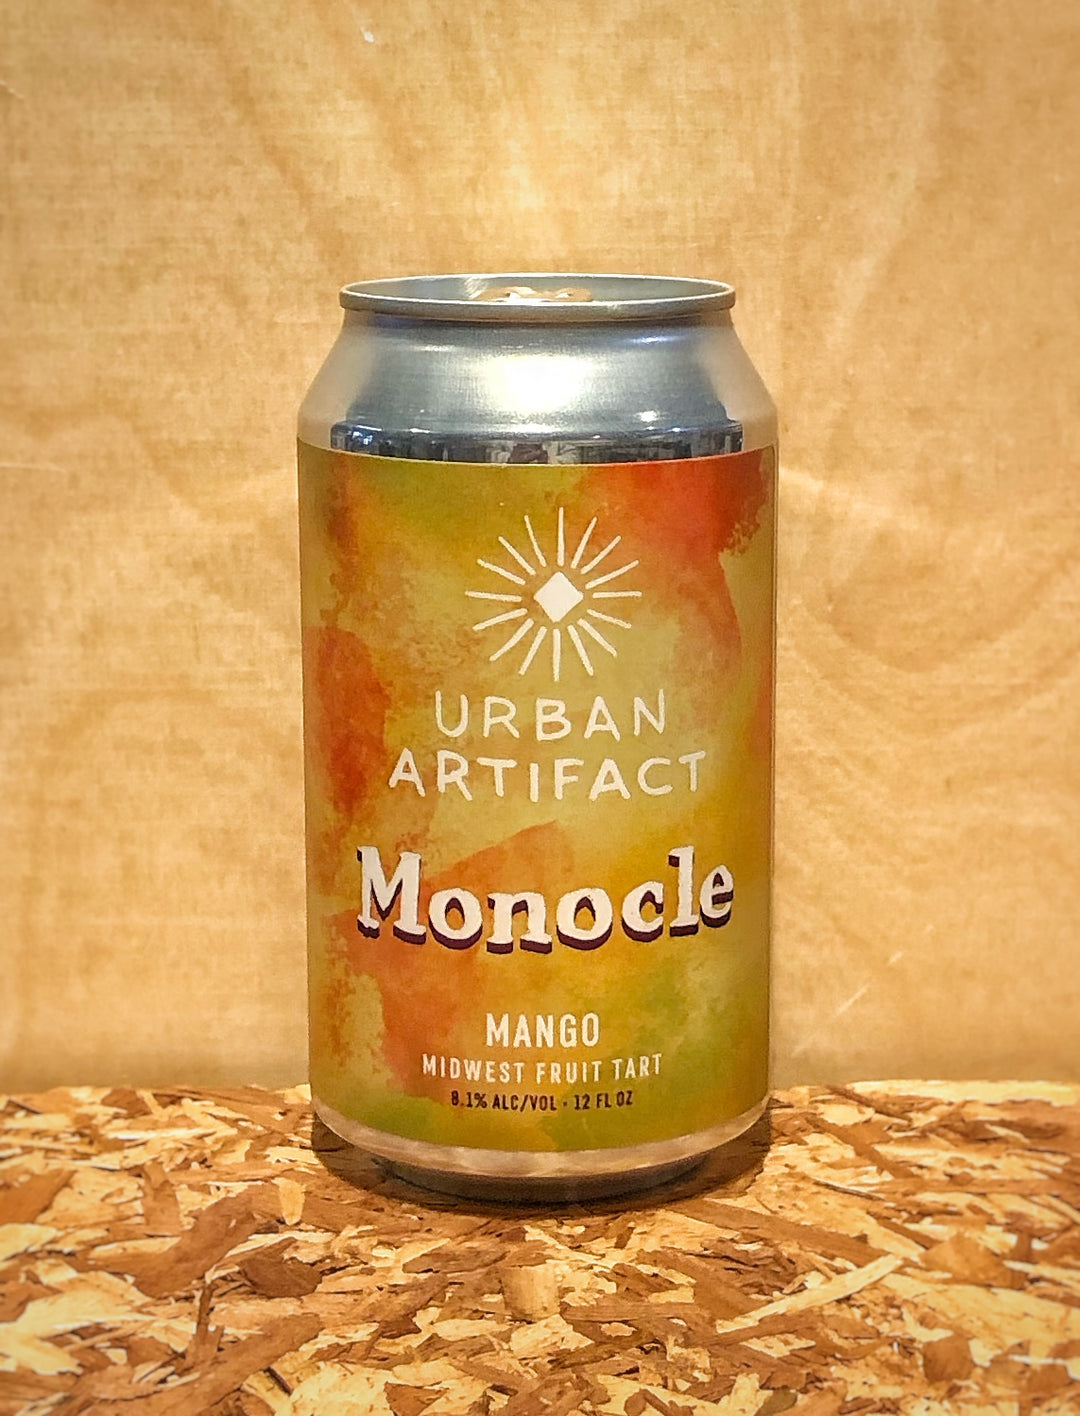 Urban Artifact 'Monocle' Mango Midwest Fruit Tart (Cincinnati, OH)